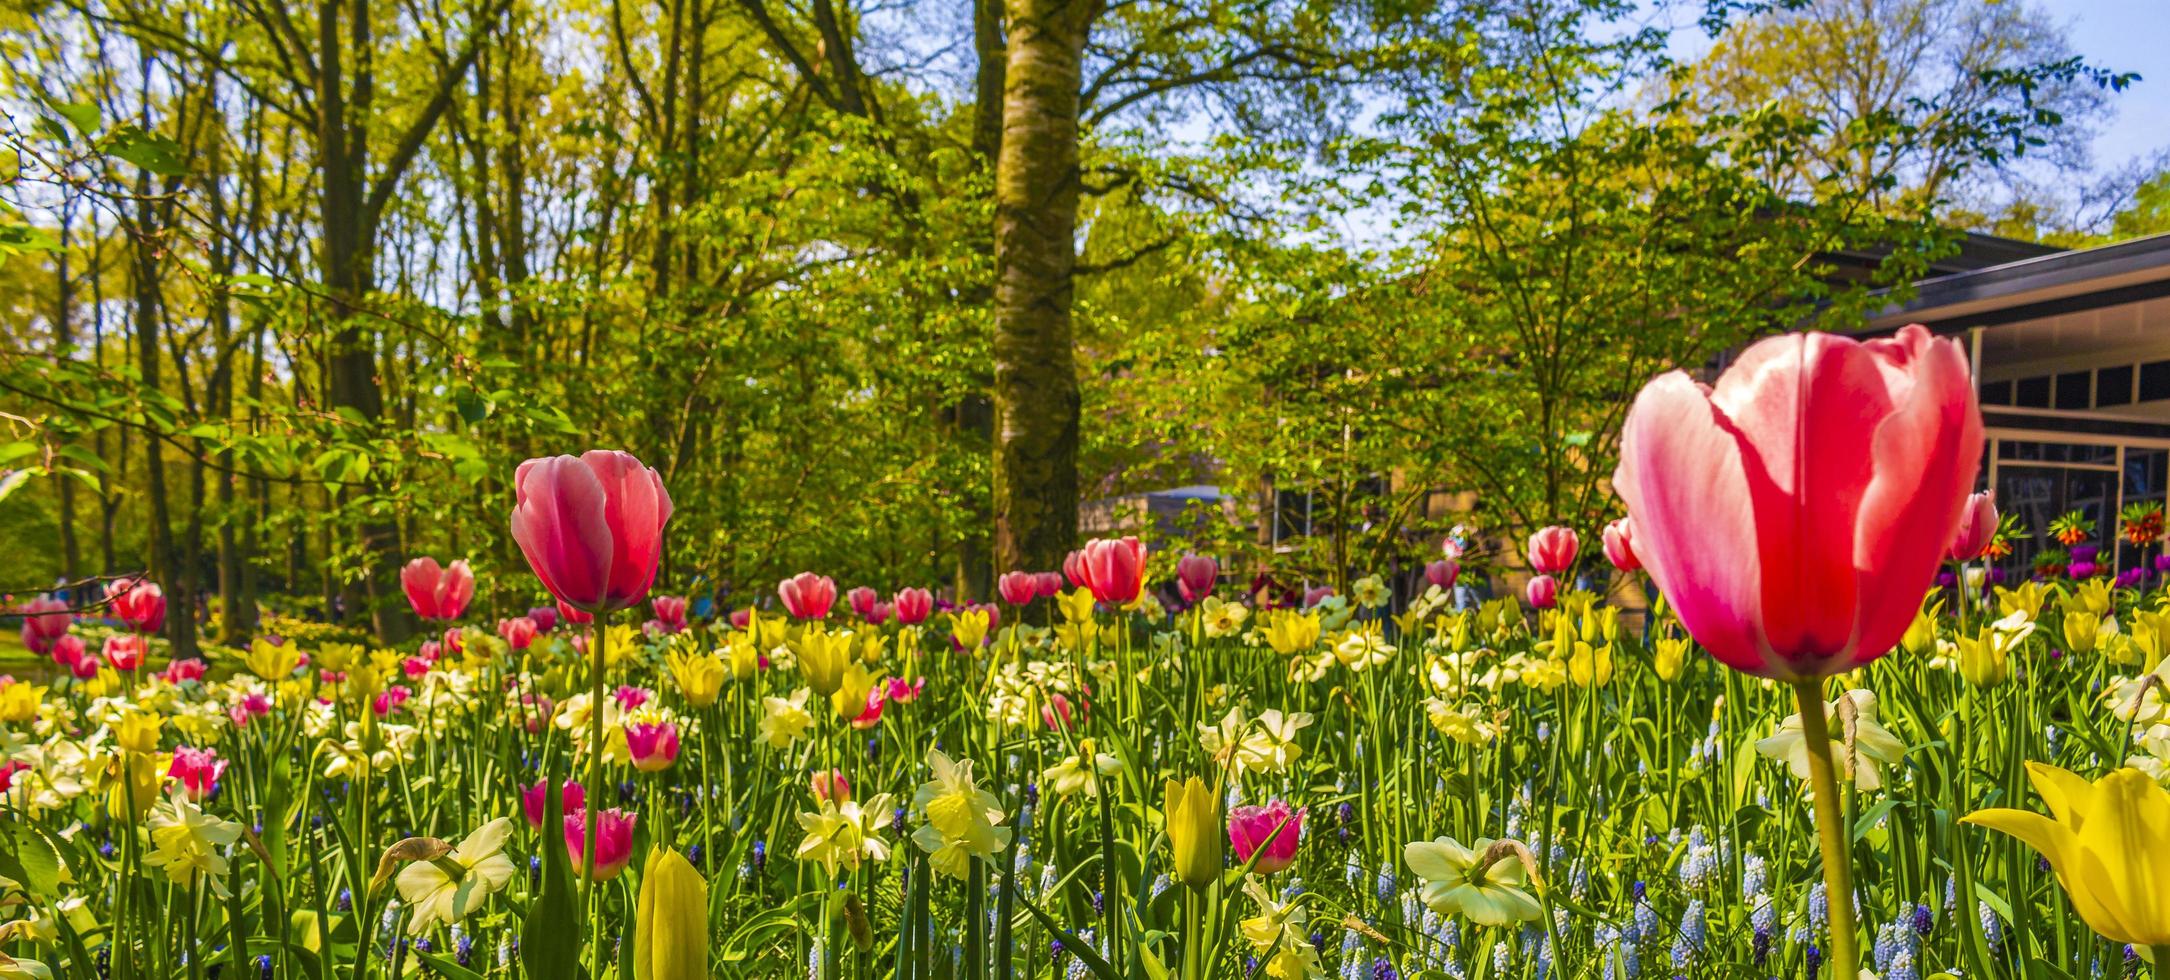 Rosa violeta tulipanes narcisos en el parque Keukenhof de Lisse Holanda Holanda foto